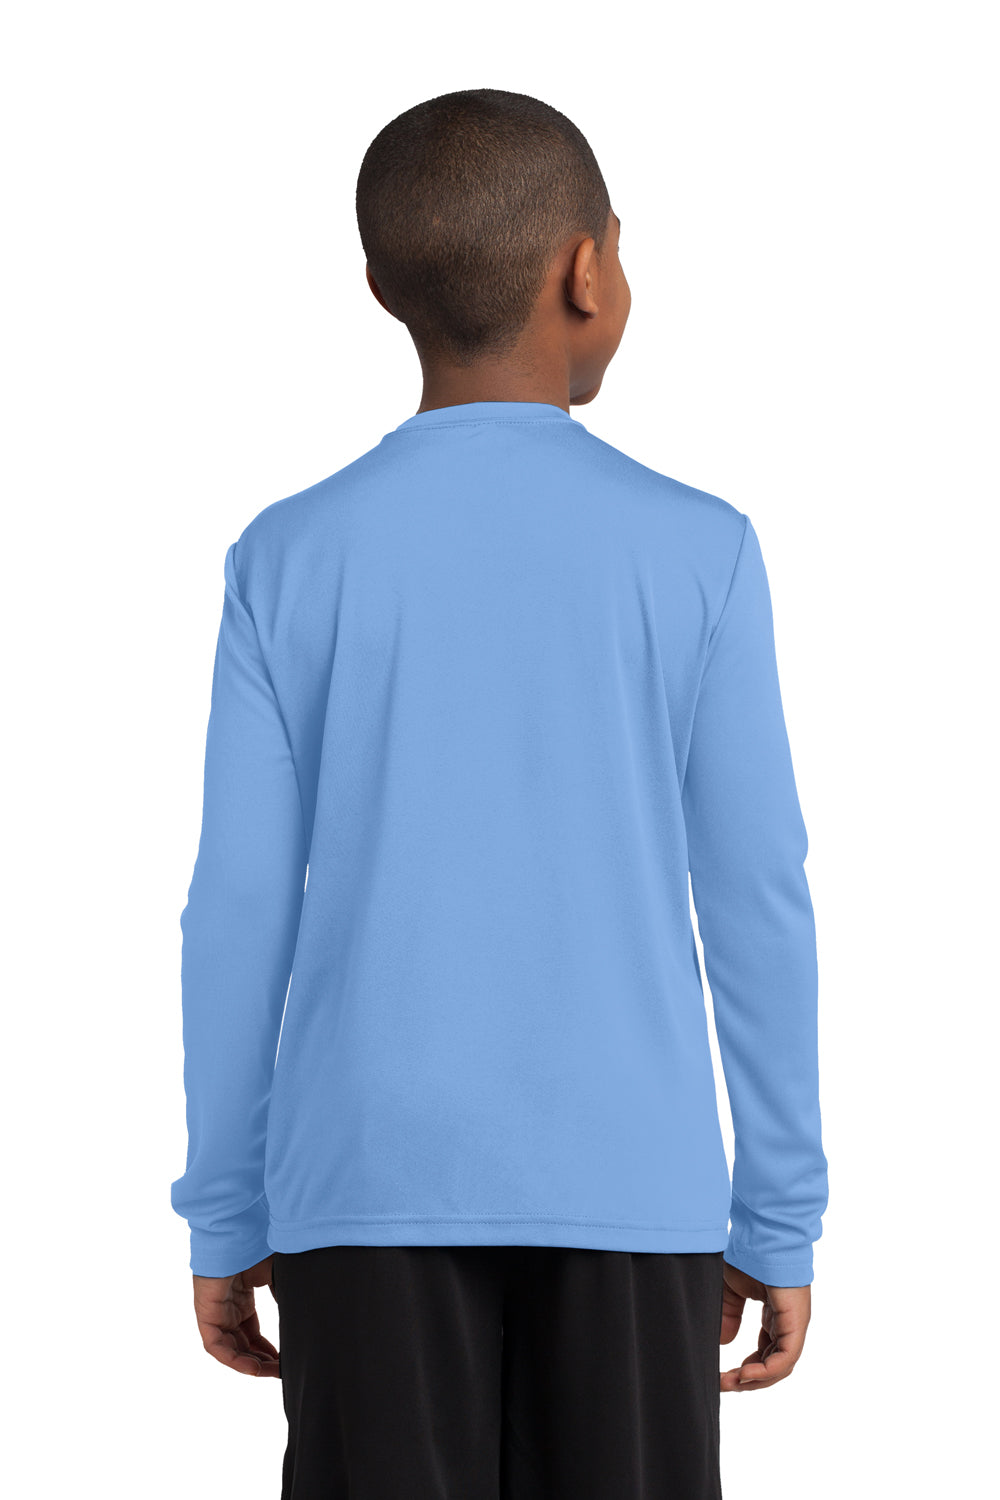 Sport-Tek YST350LS Youth Competitor Moisture Wicking Long Sleeve Crewneck T-Shirt Carolina Blue Back